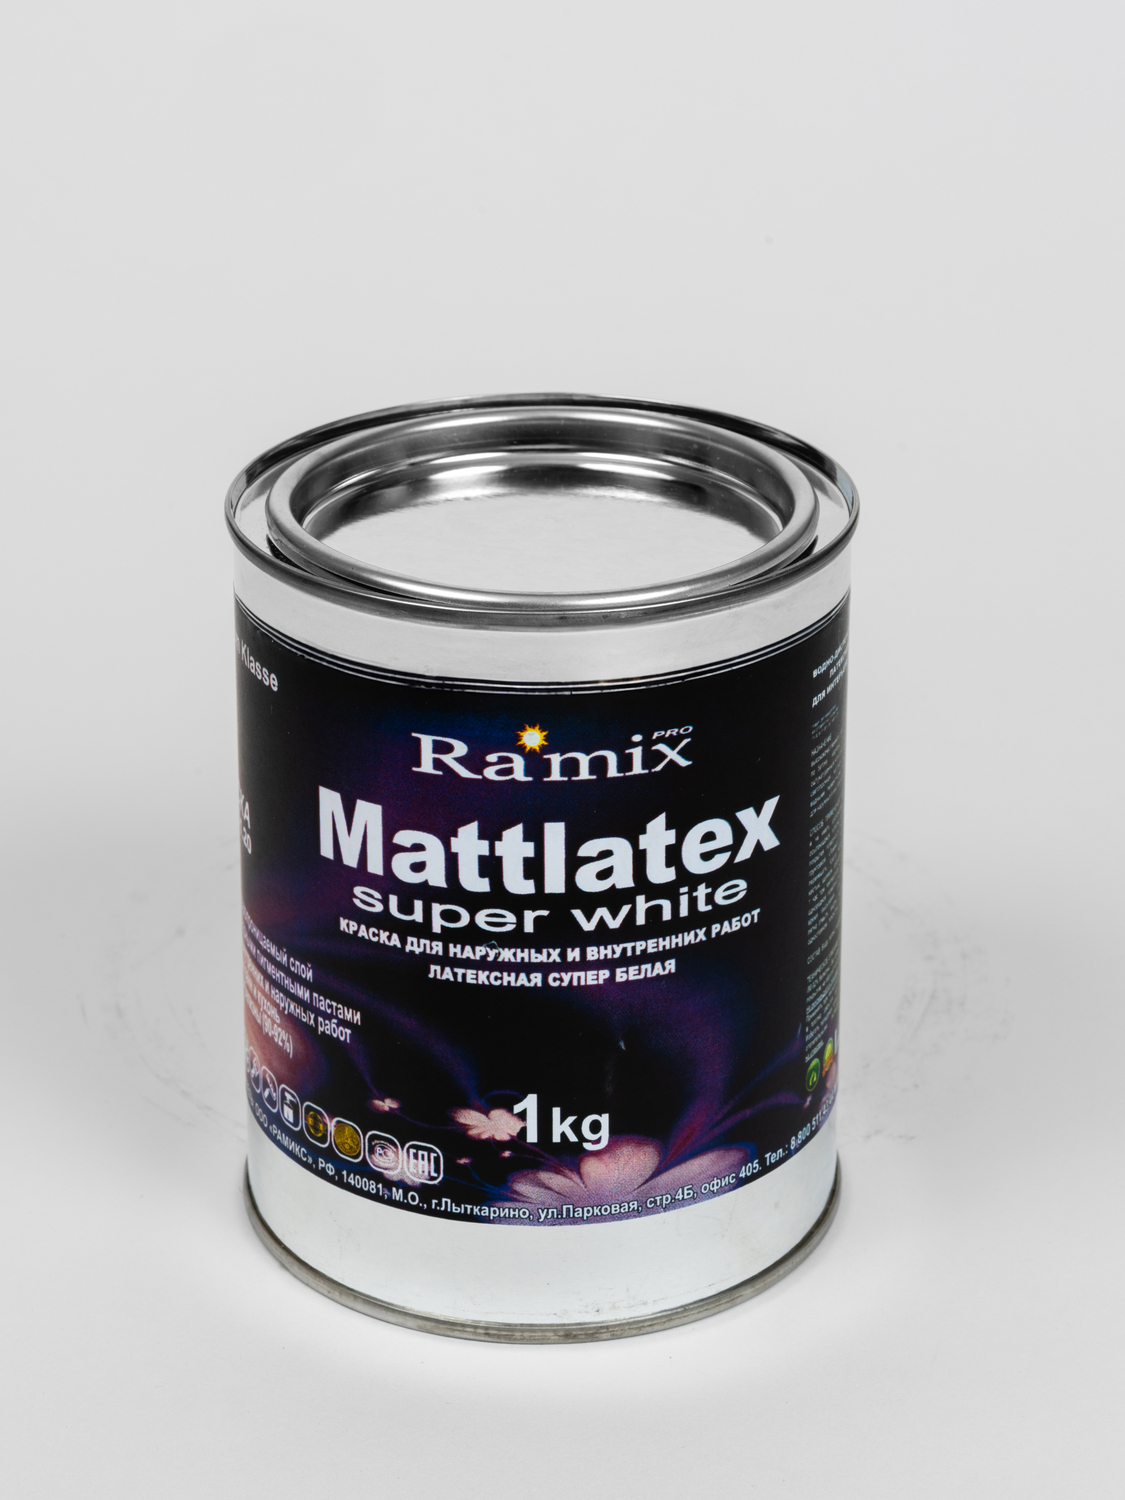 "MATTLATEX"